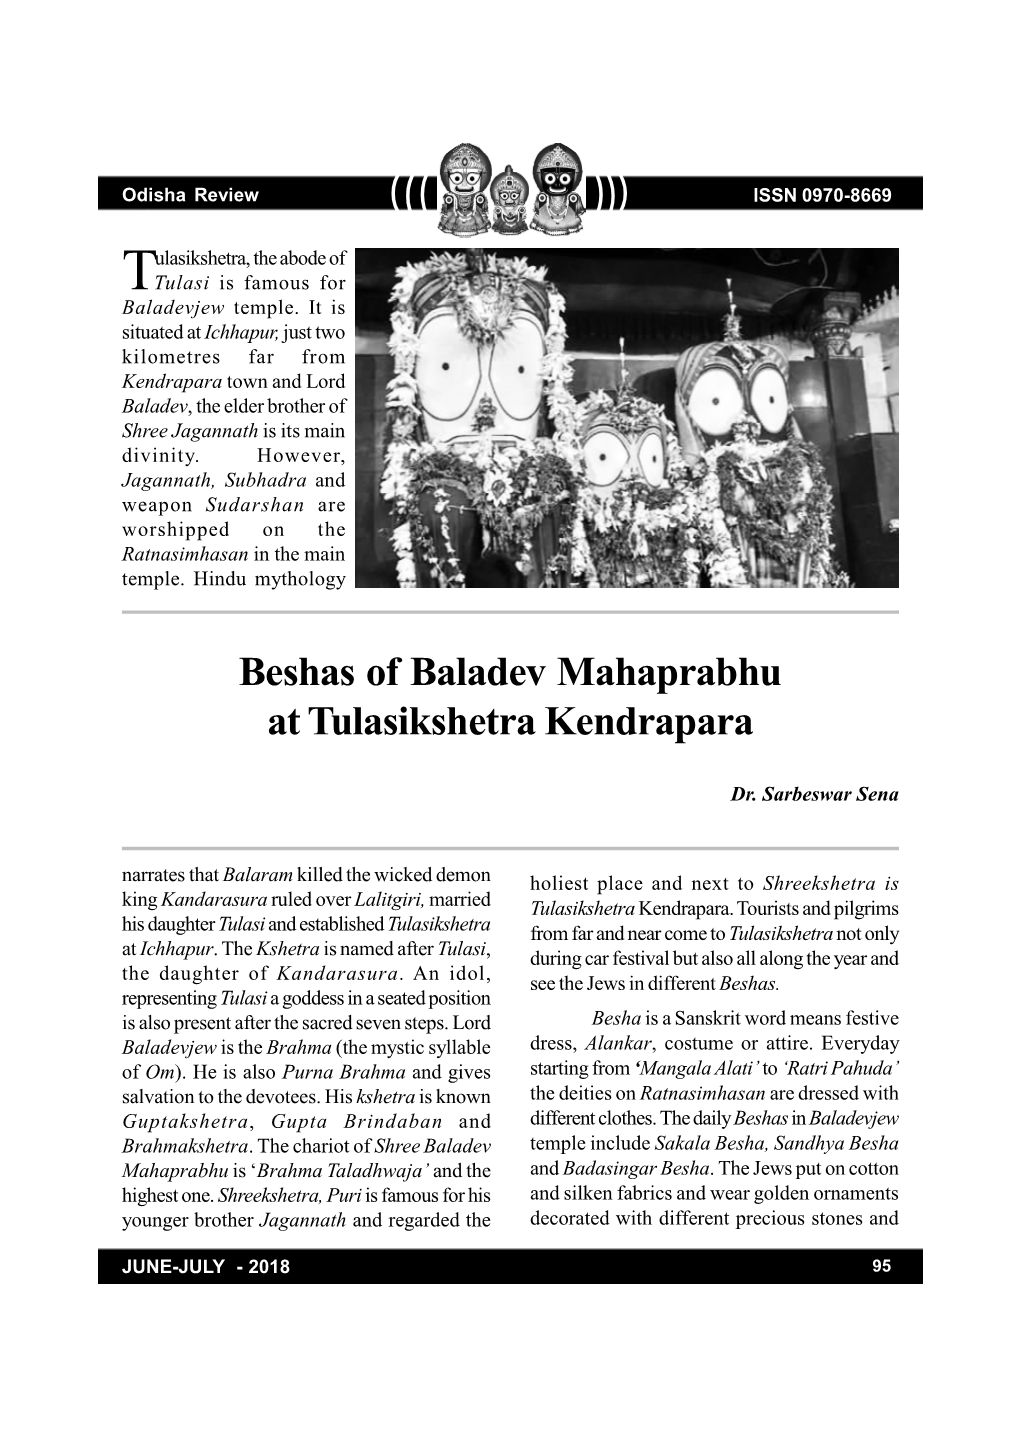 Beshas of Baladev Mahaprabhu at Tulasikshetra Kendrapara